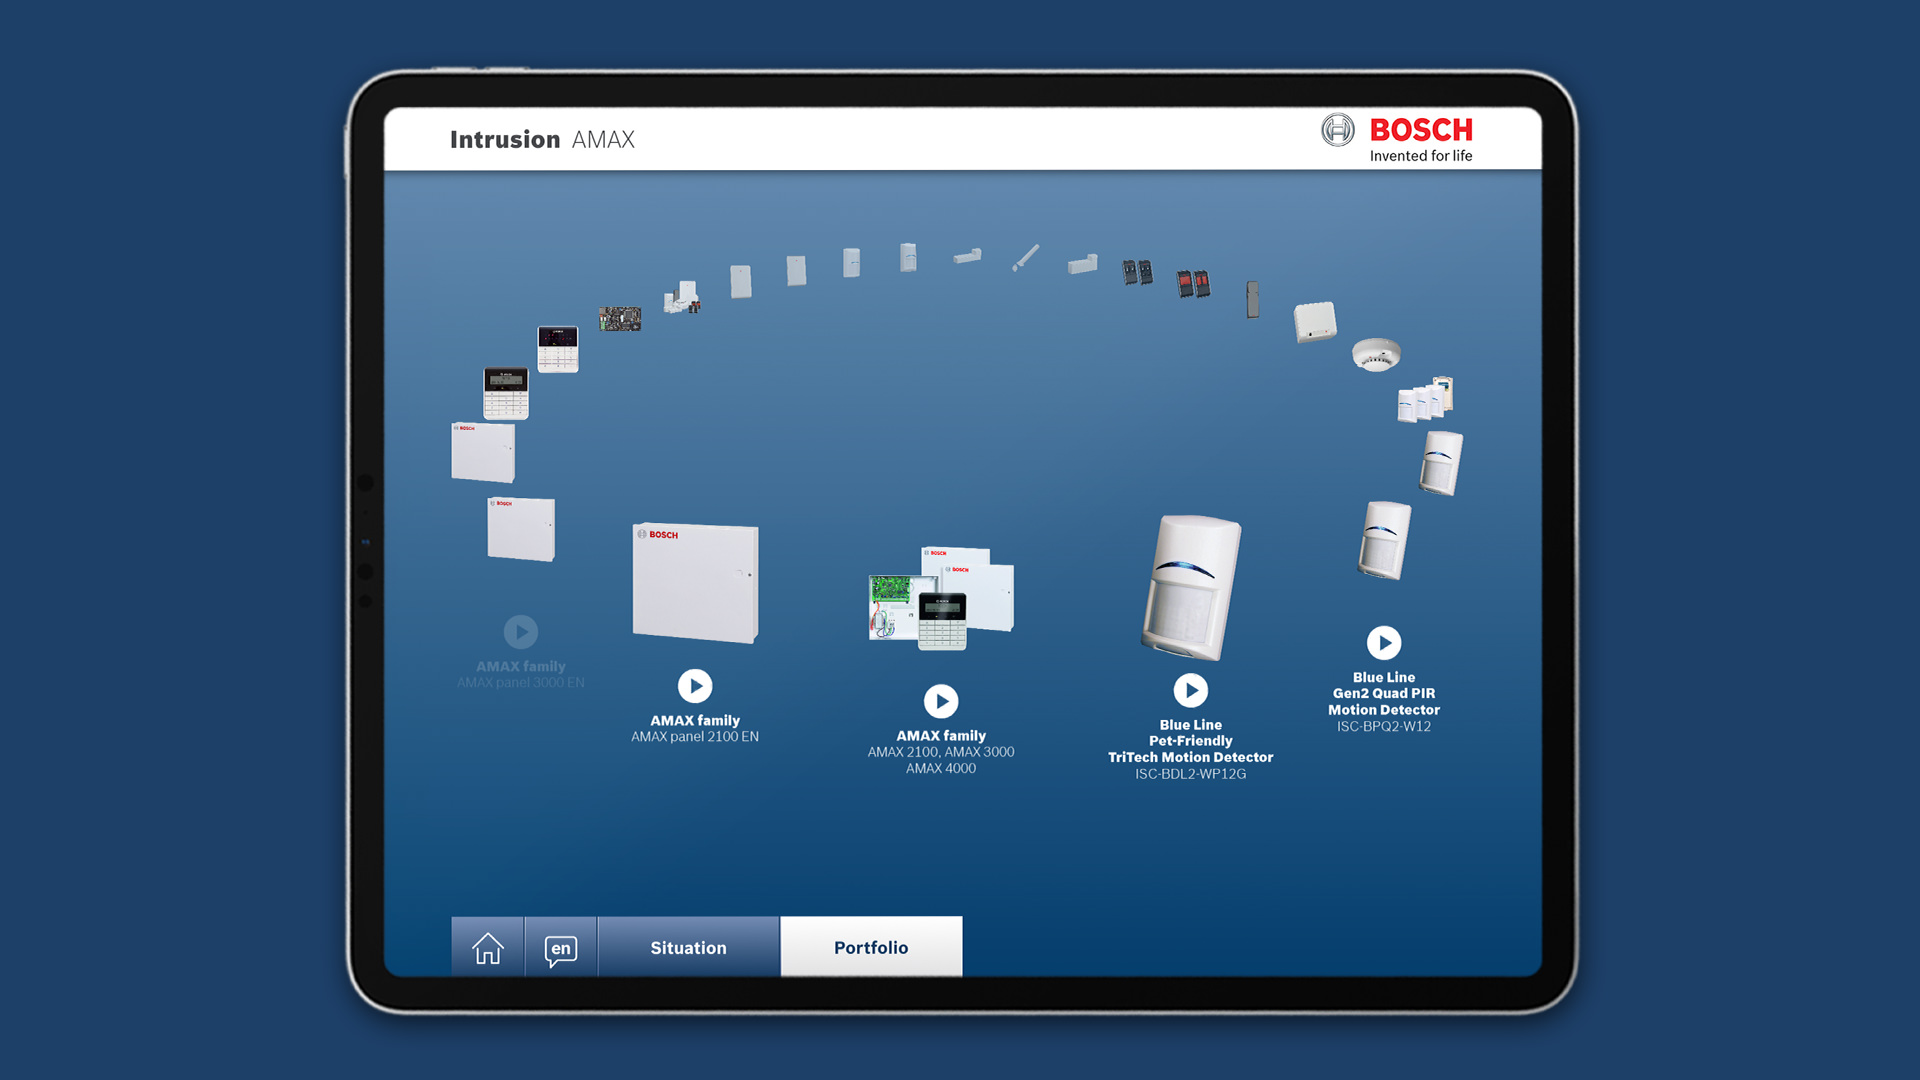 Bosch-Sicherheitssysteme-Intrusion-Realtime-3D-Application-03-Carousel-Menu-Mihalevitch